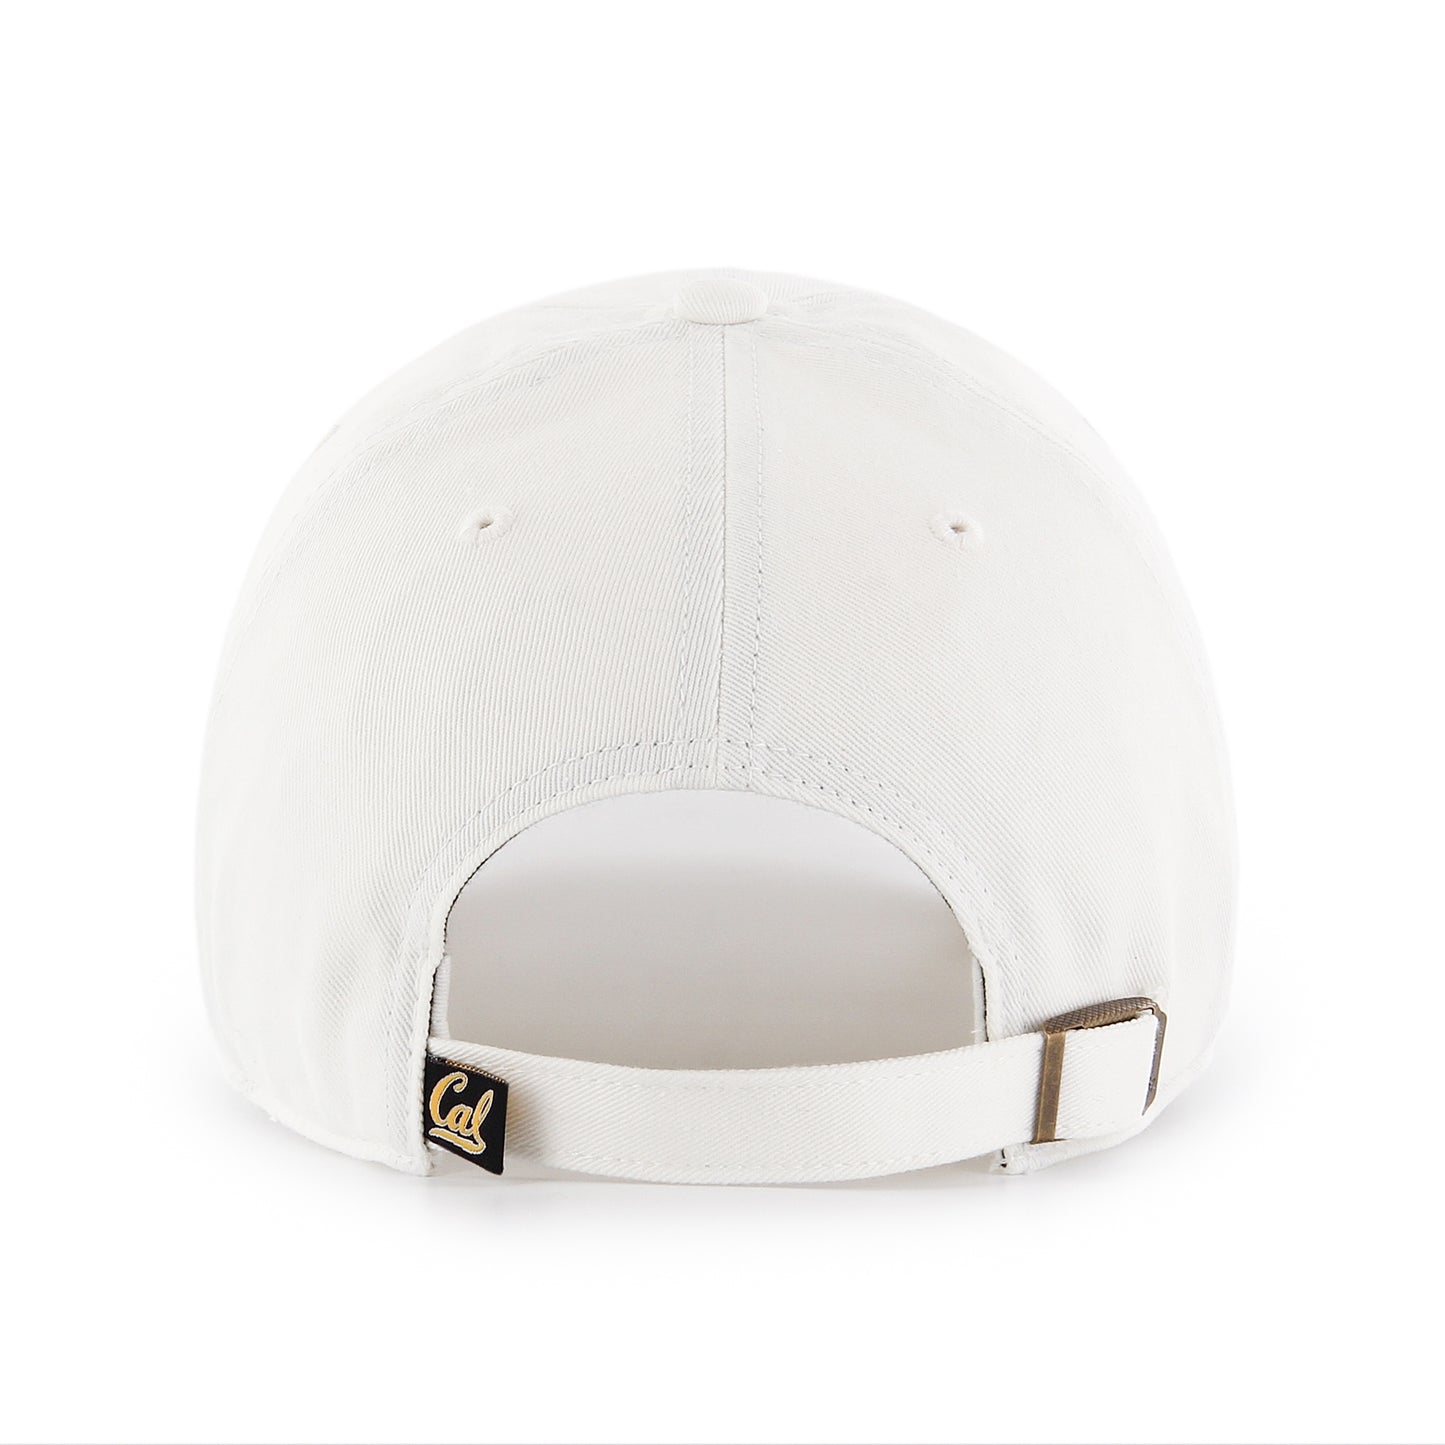 U.C. Berkeley Cal Embroidered adjustable hat-White-Shop College Wear